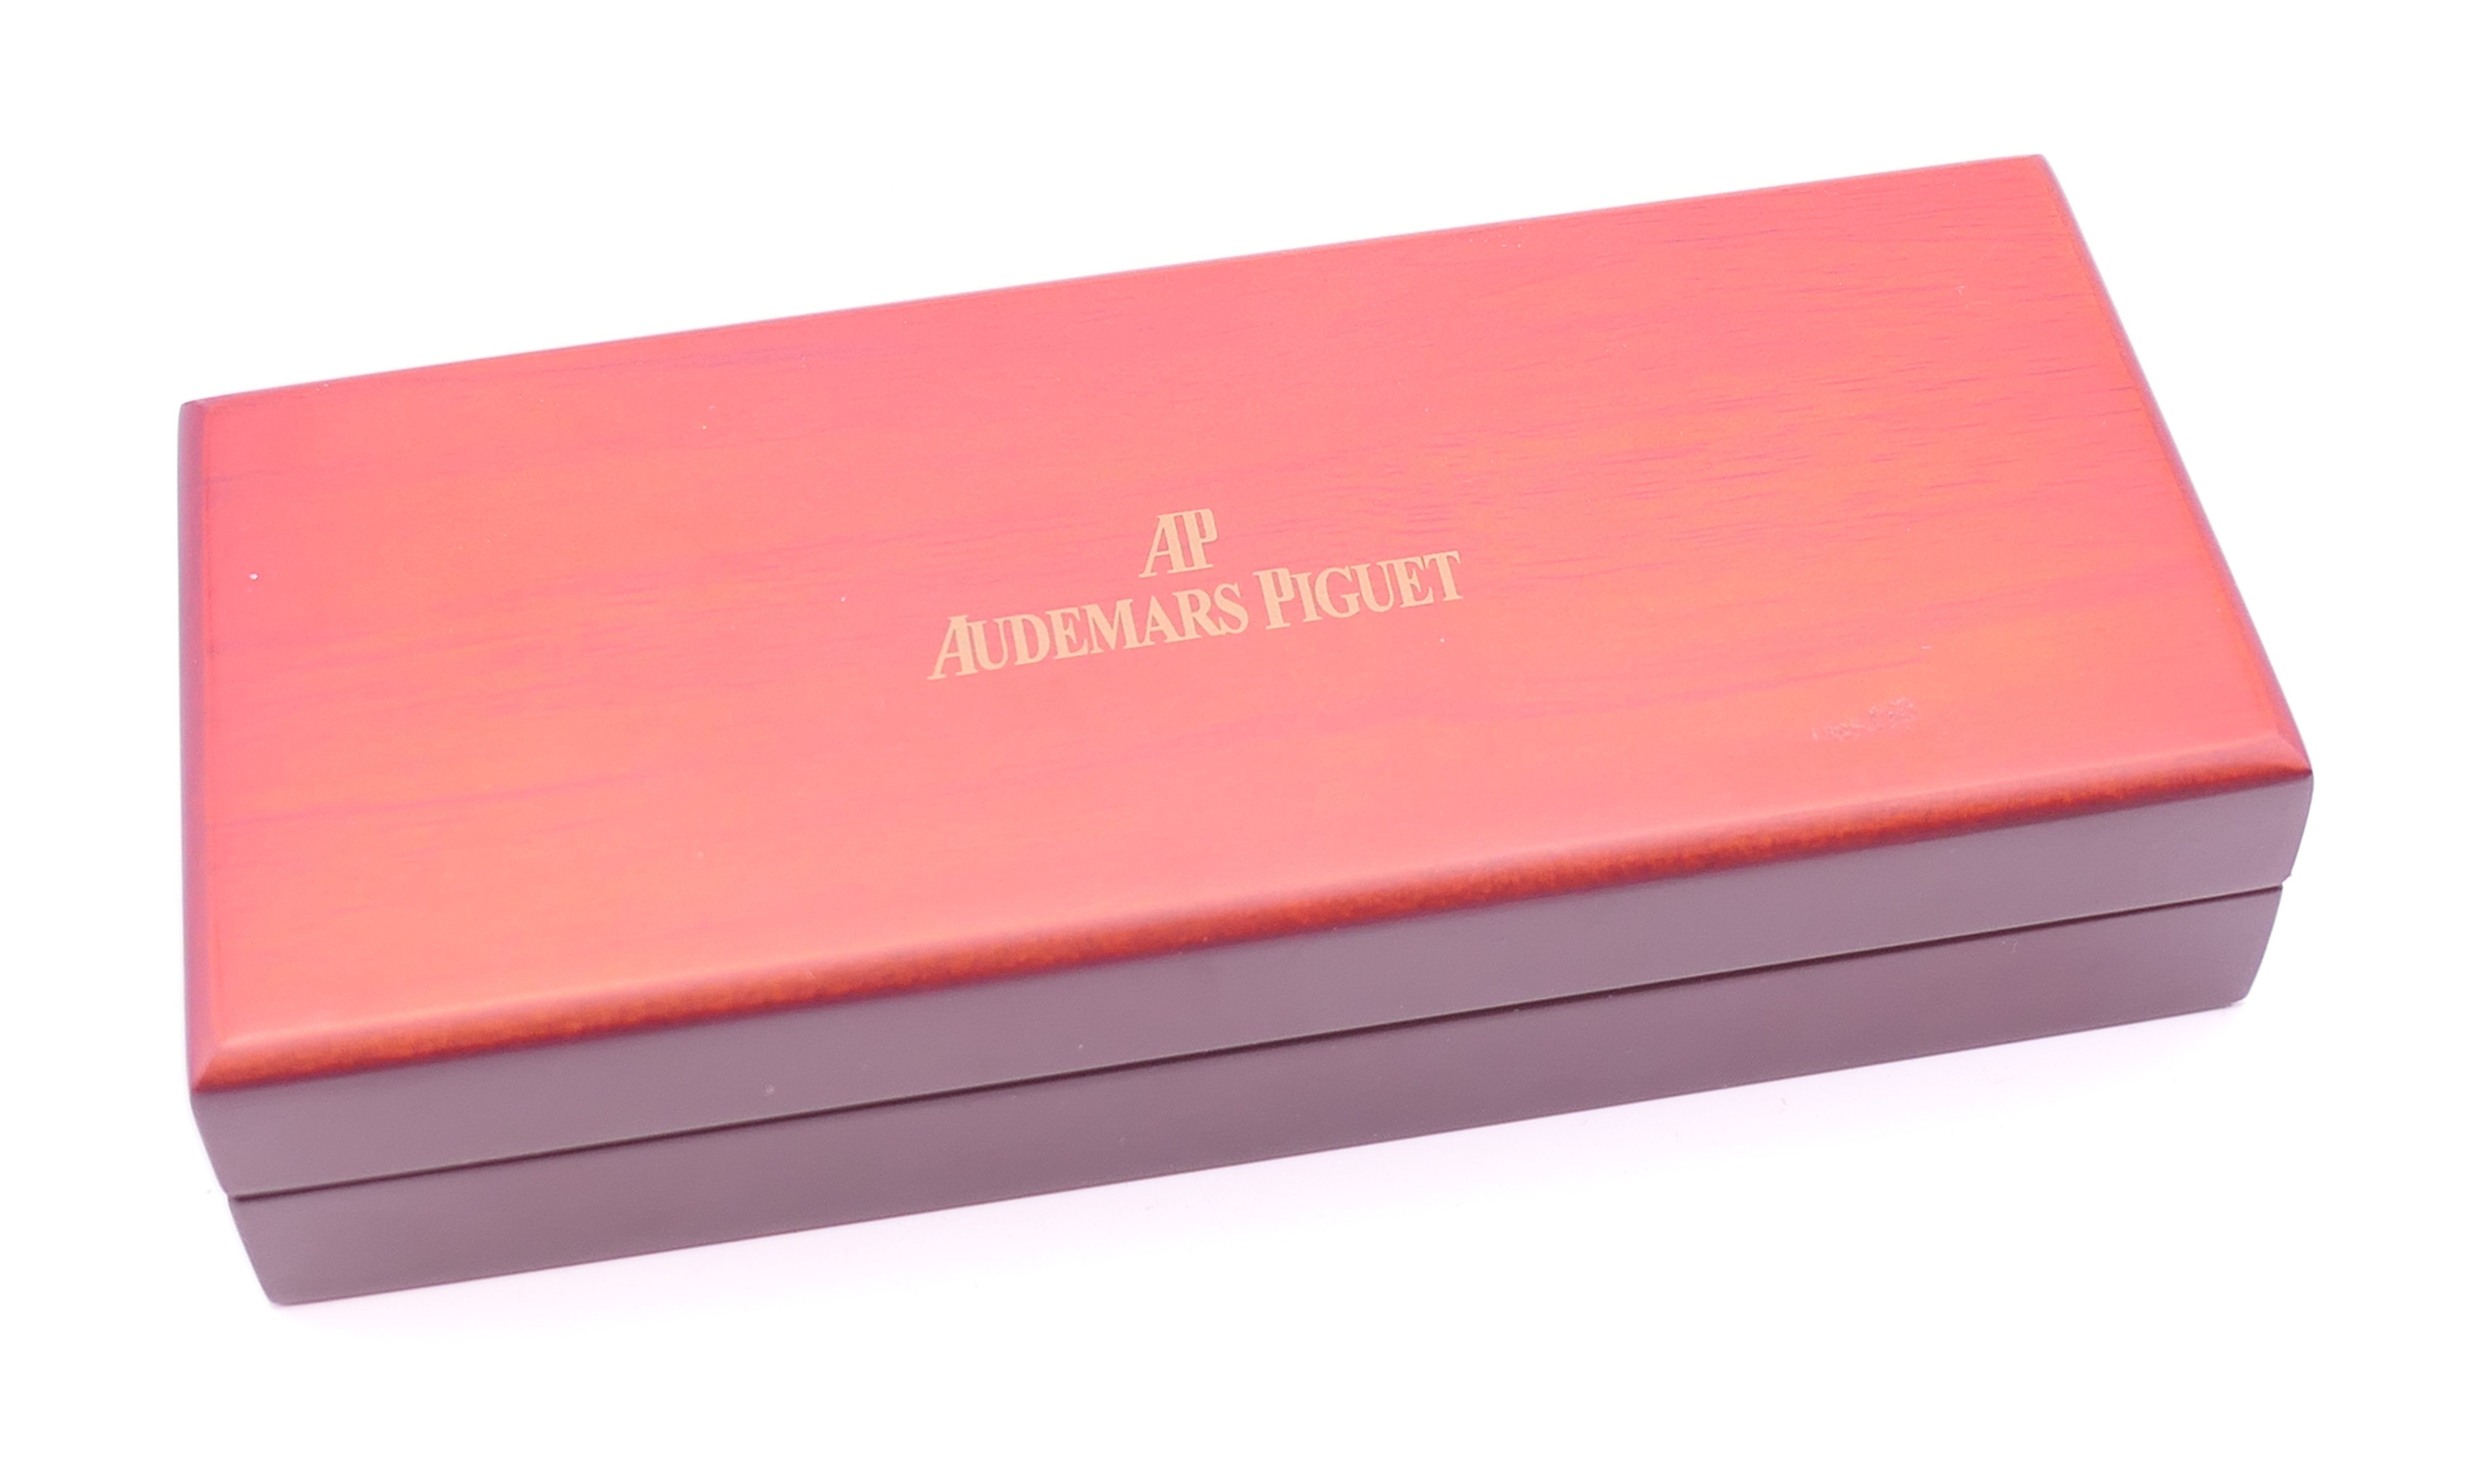 A Audemars Piquet biro pen in original box. - Image 6 of 6